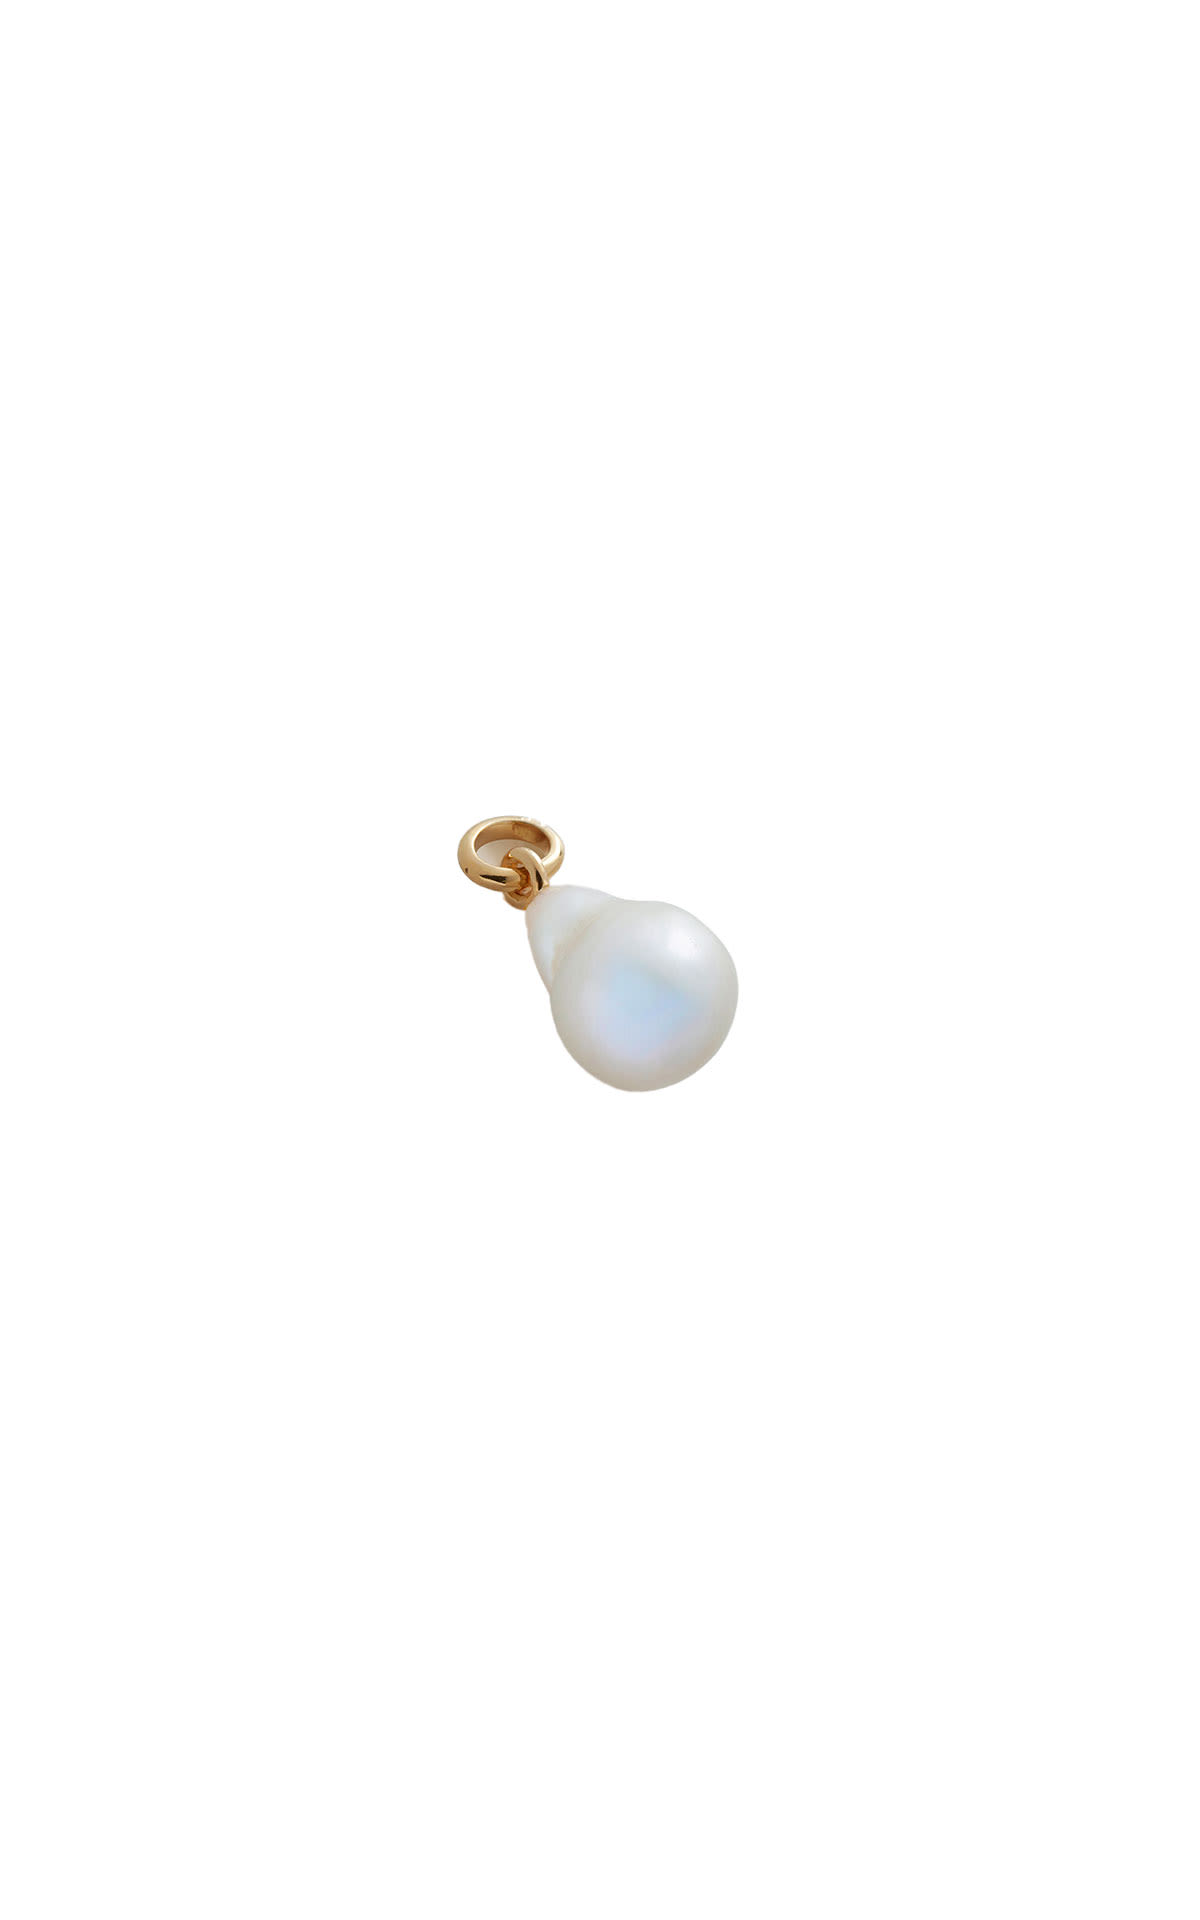 Monica Vinader GP Nura baroque pearl pendant charm pearl from Bicester Village